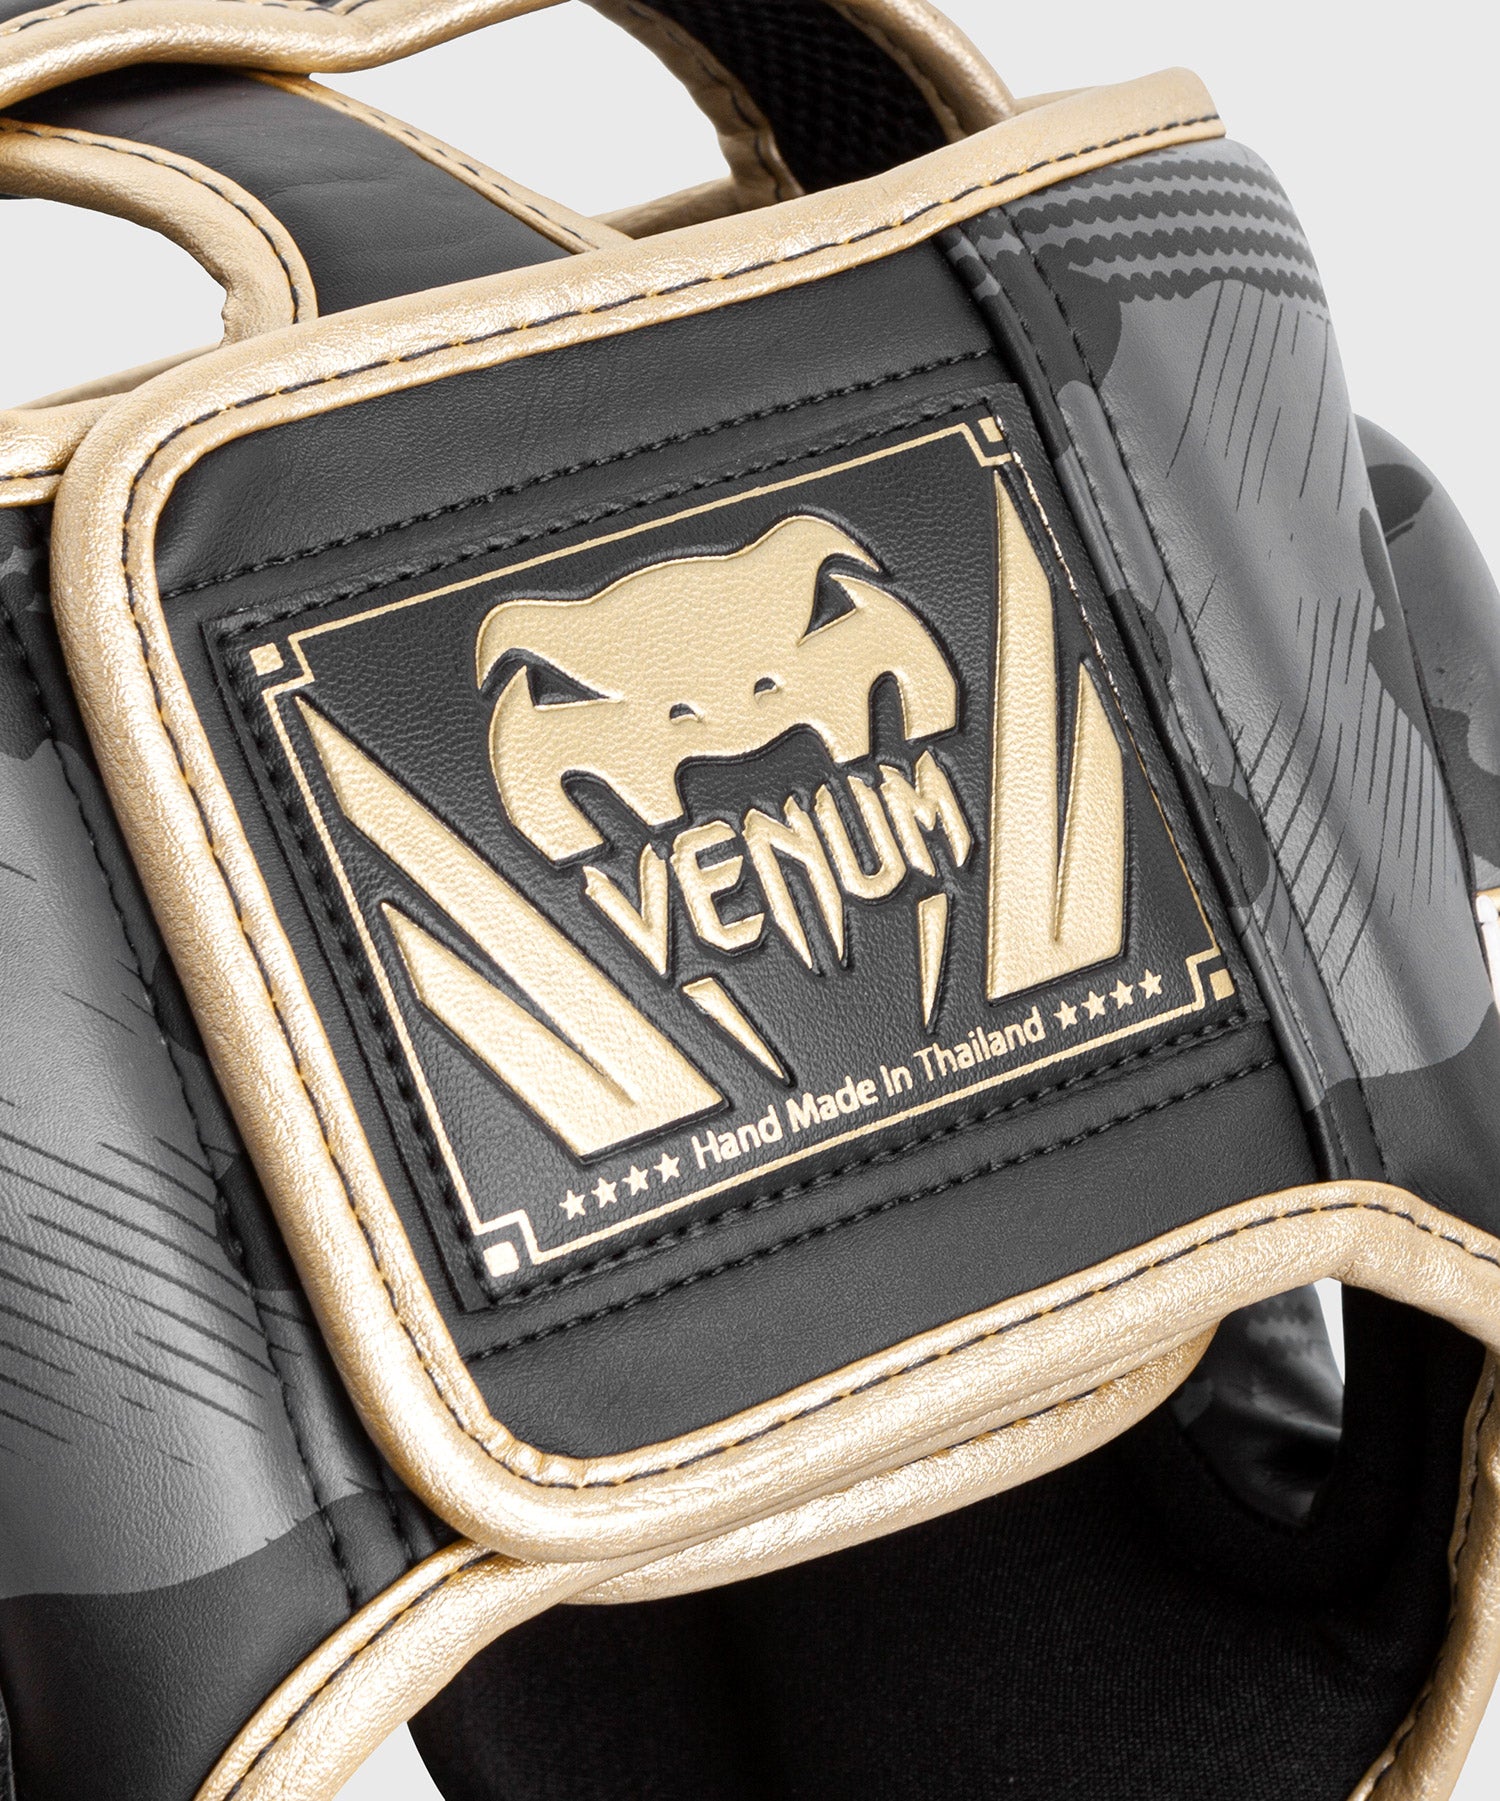 Casco de boxeo Venum Elite – Venum España